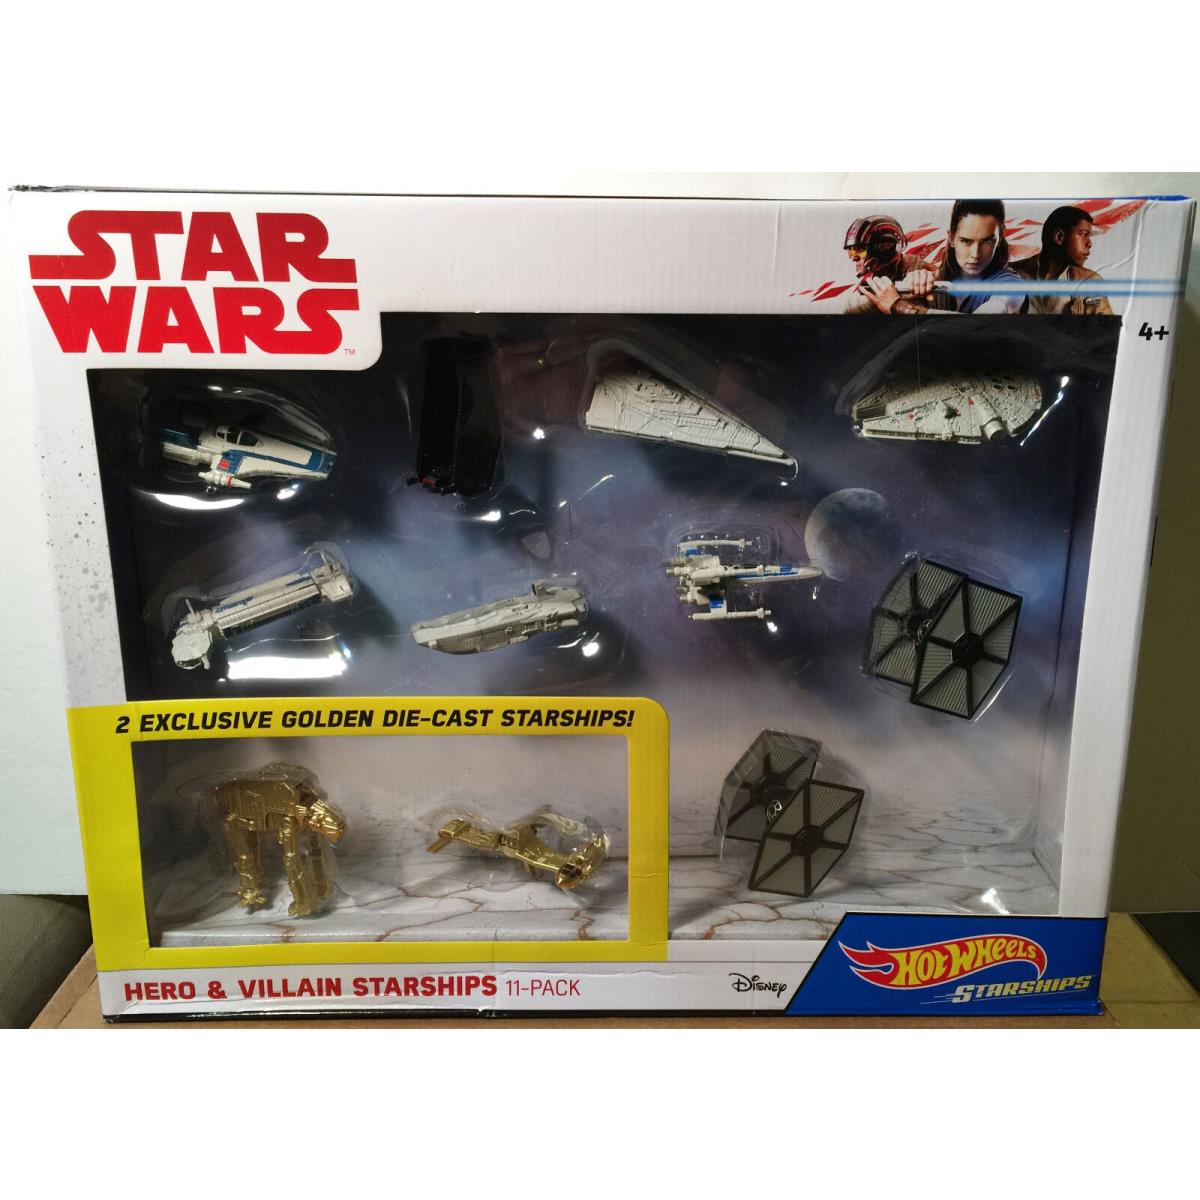 Disney Hot Wheels Star Wars The Last Jedi Hero Villain Starships 11 Pack